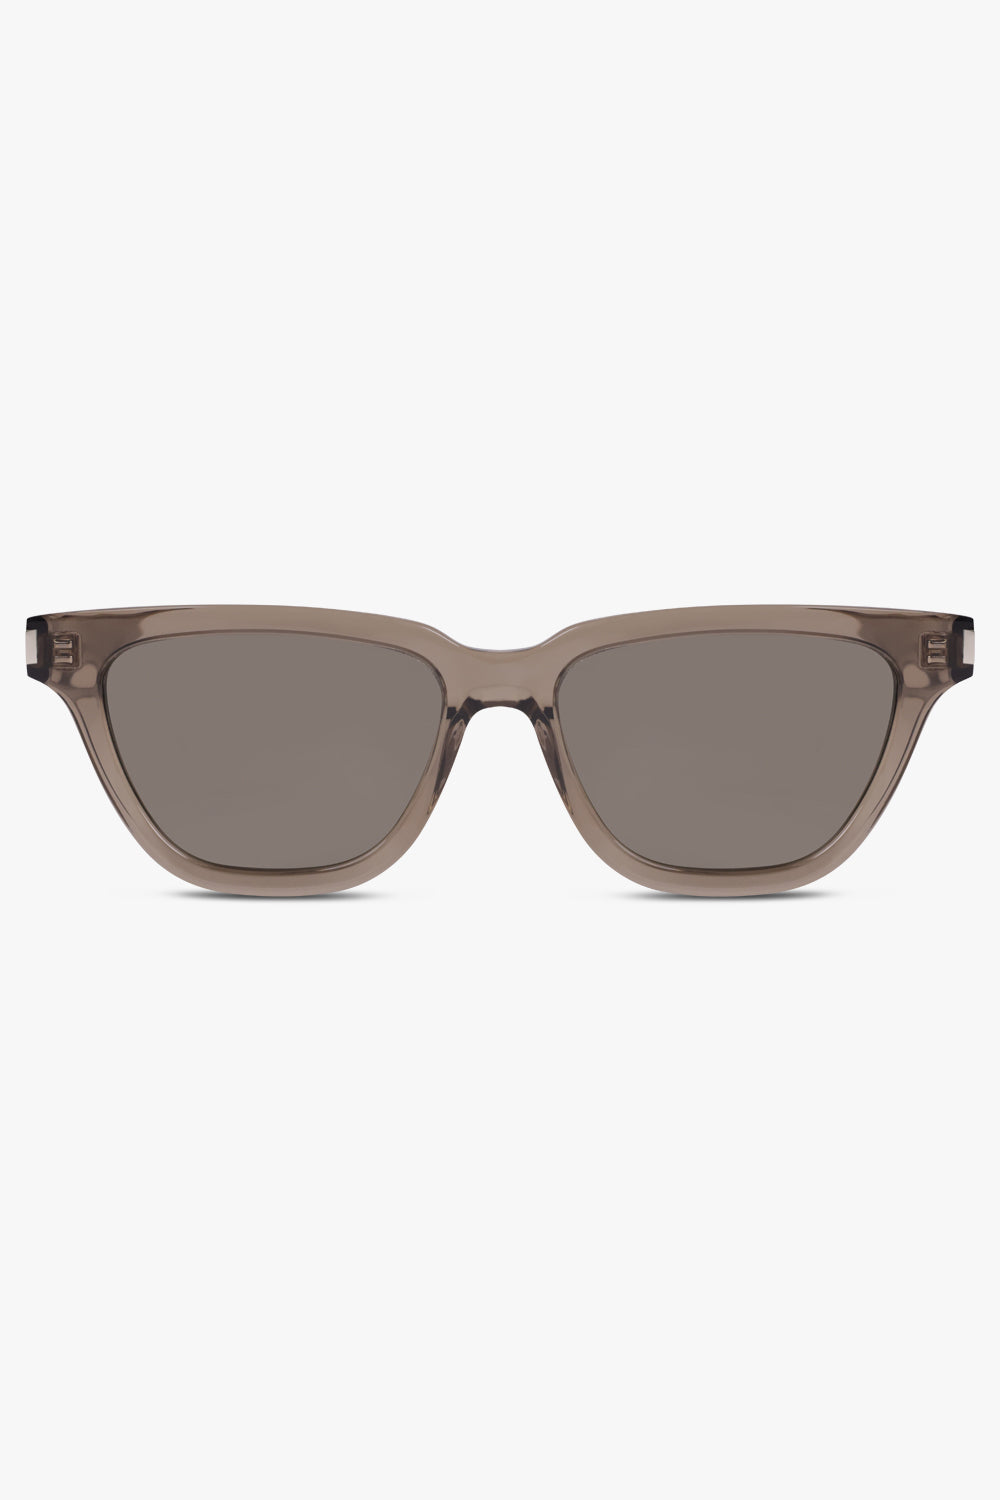 SAINT LAURENT ACCESSORIES Brown Sulpice 462 Sunglasses | Transparent Brown/Light Grey